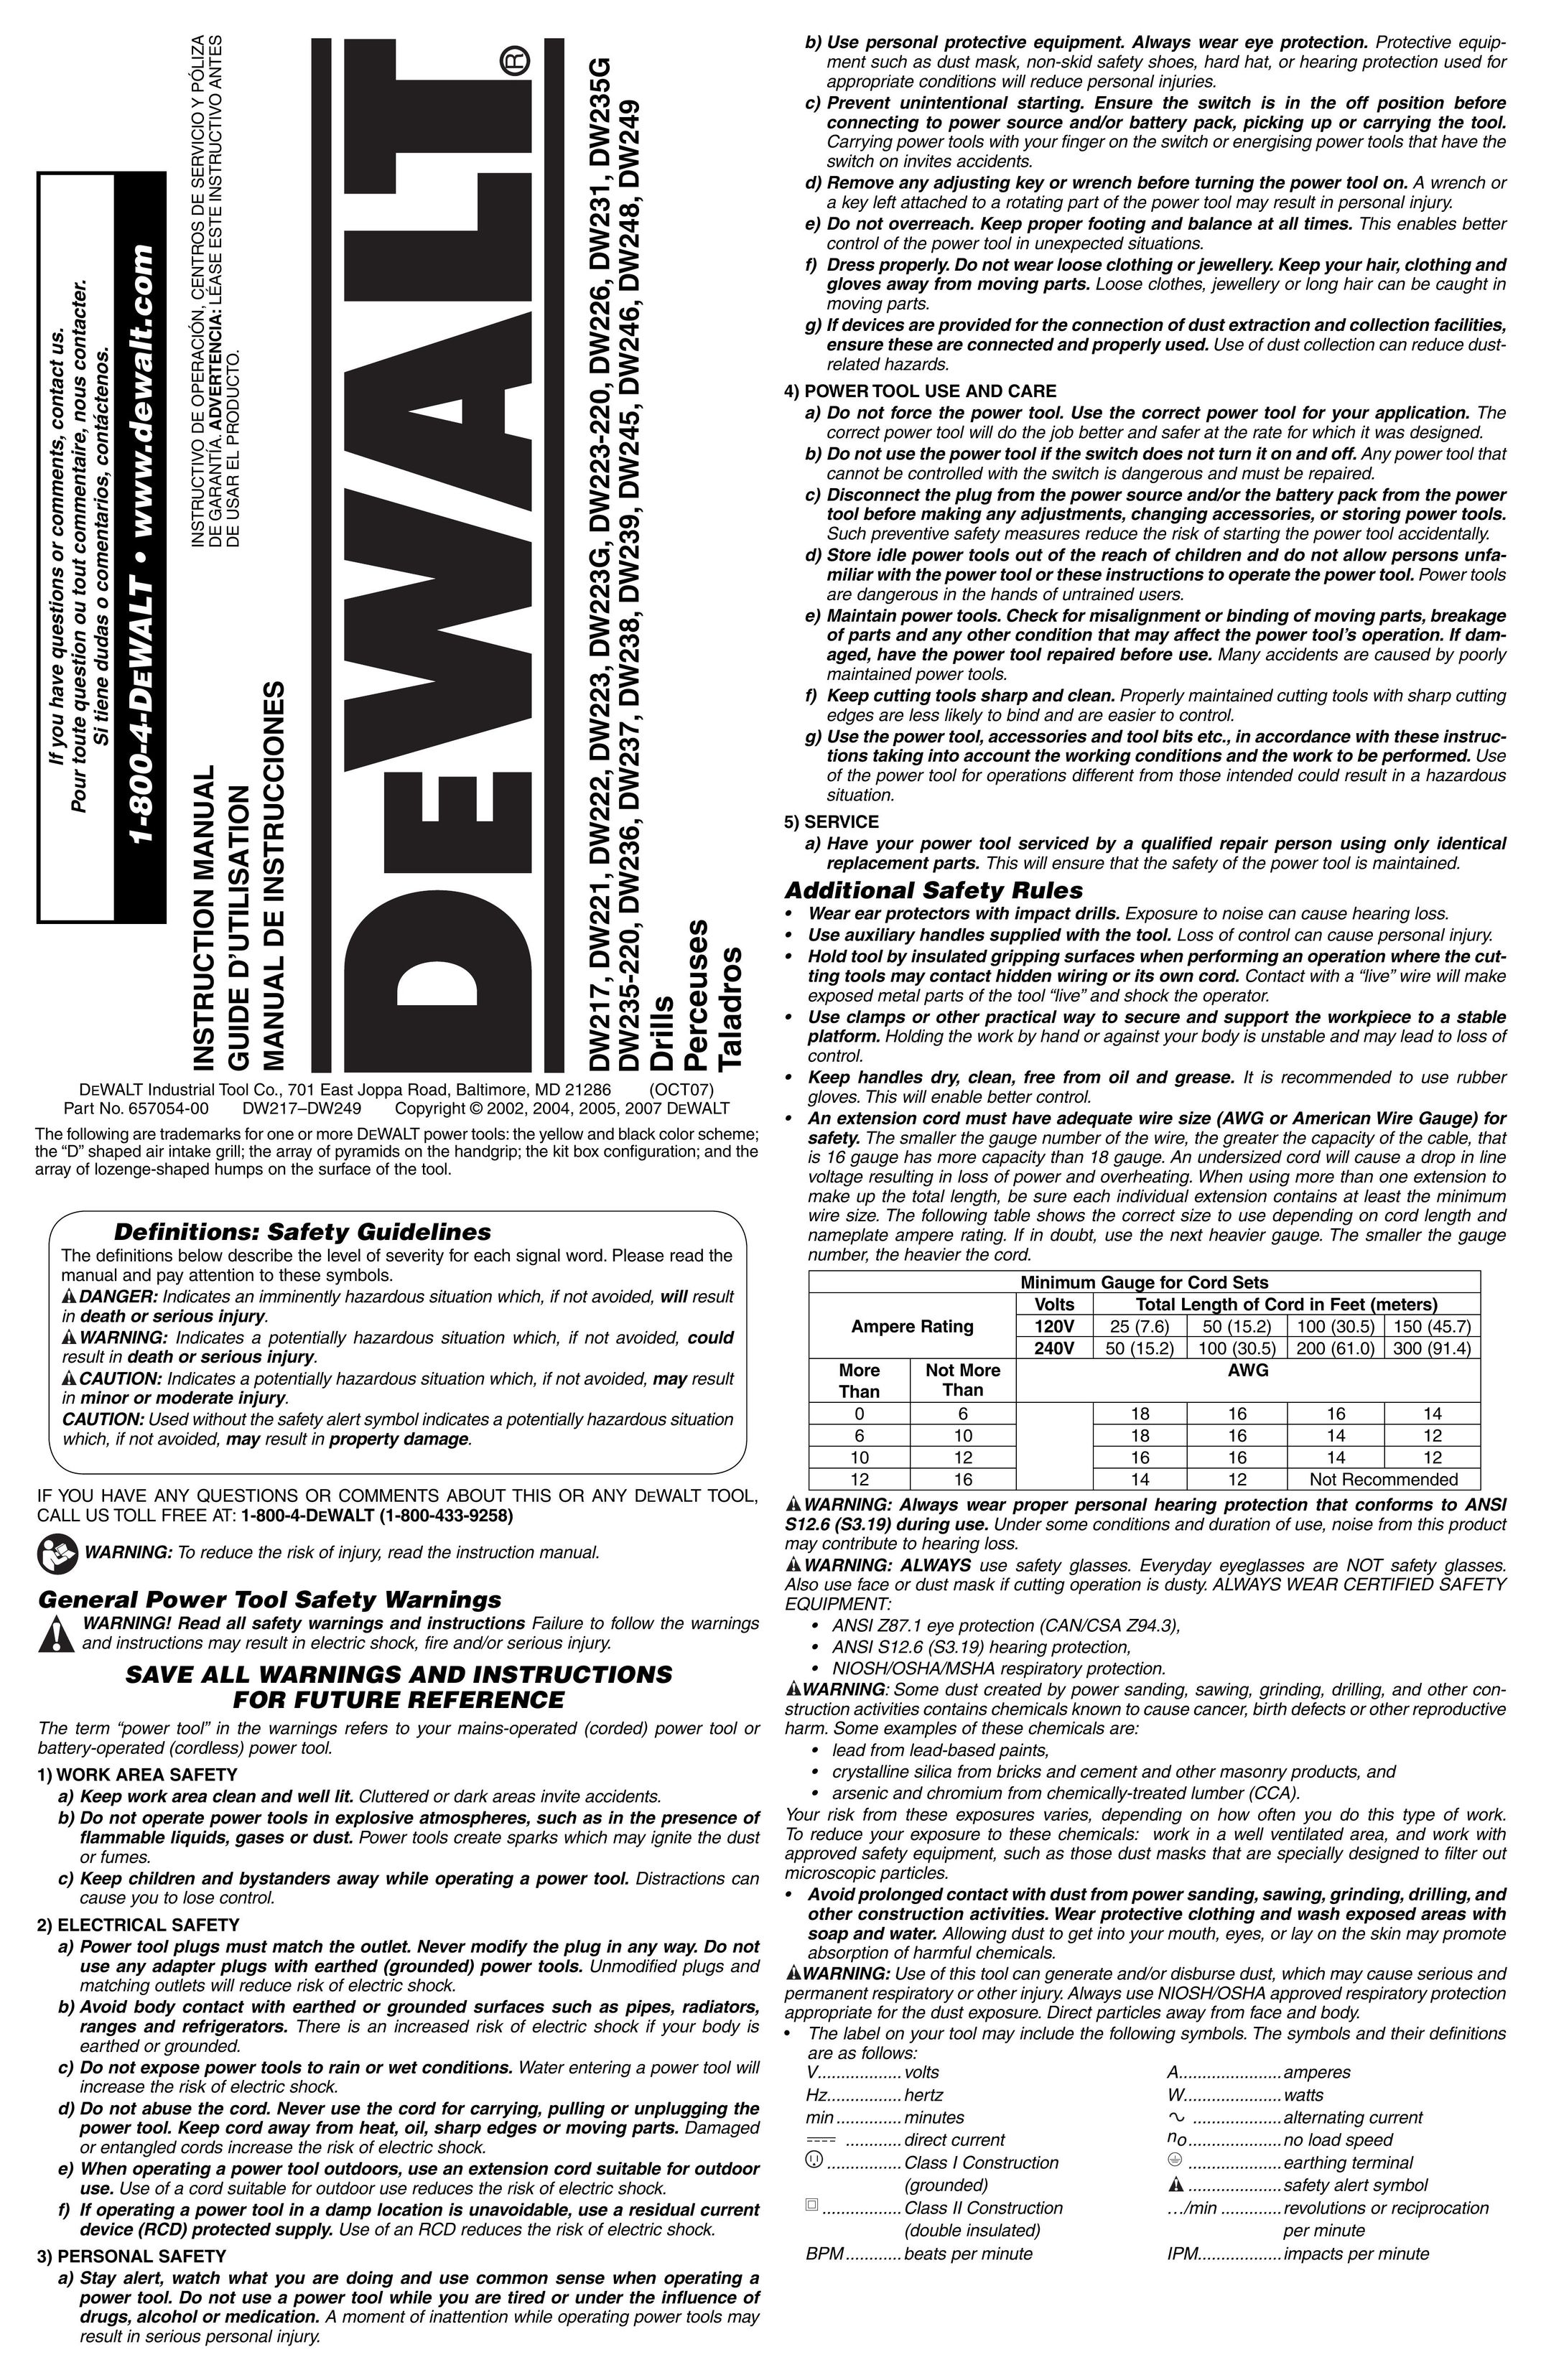 DeWalt DW221 Drill User Manual